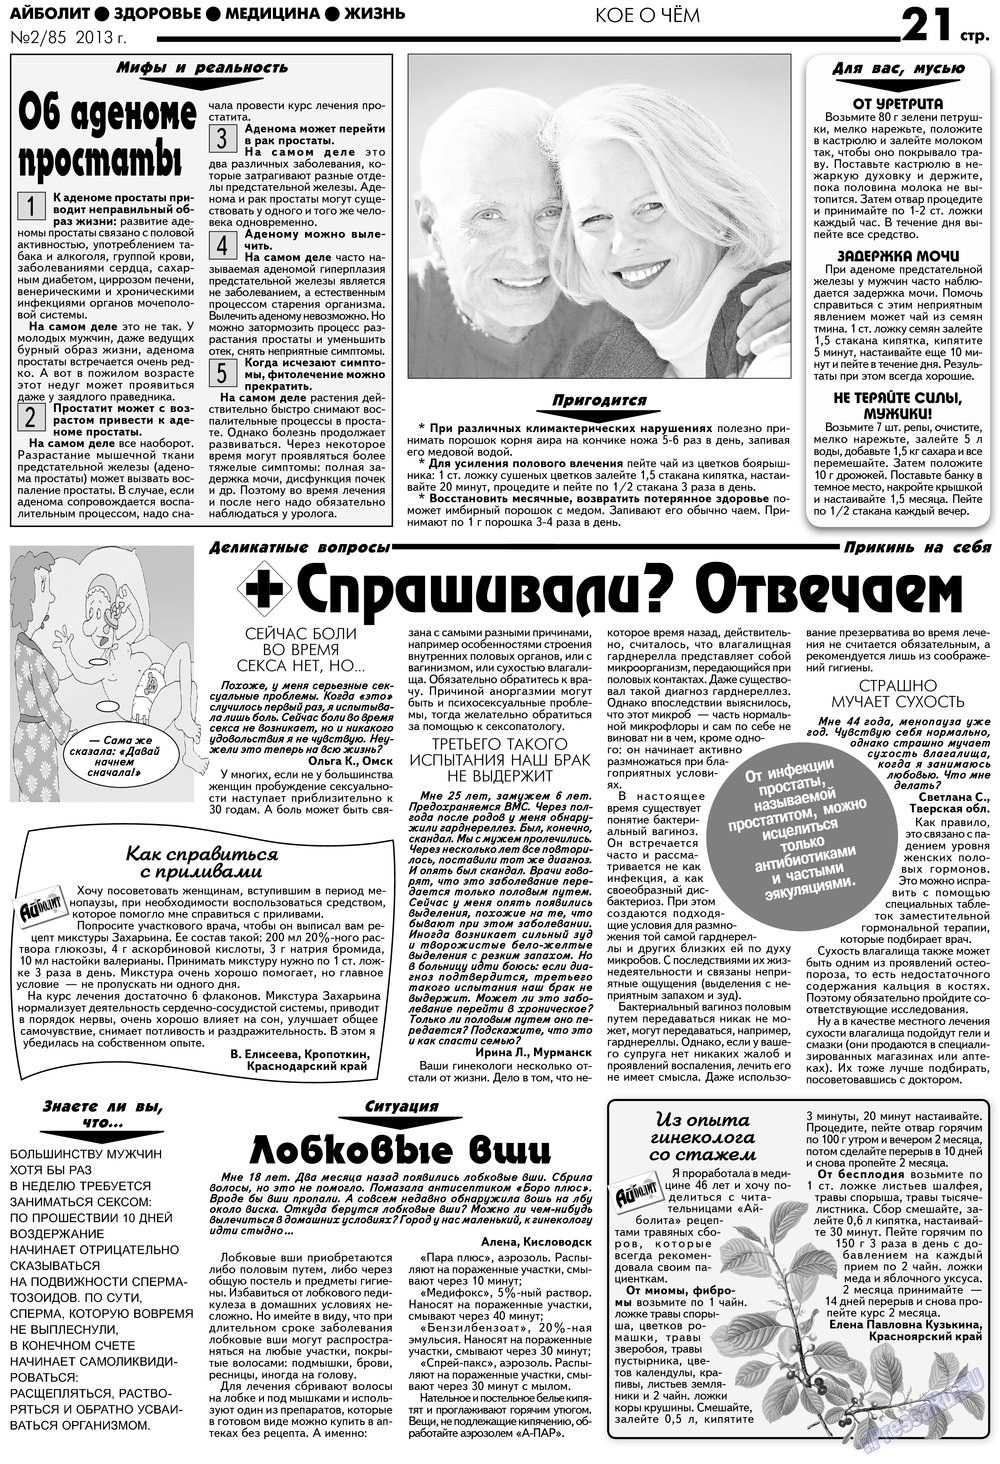 АйБолит (газета). 2013 год, номер 2, стр. 21